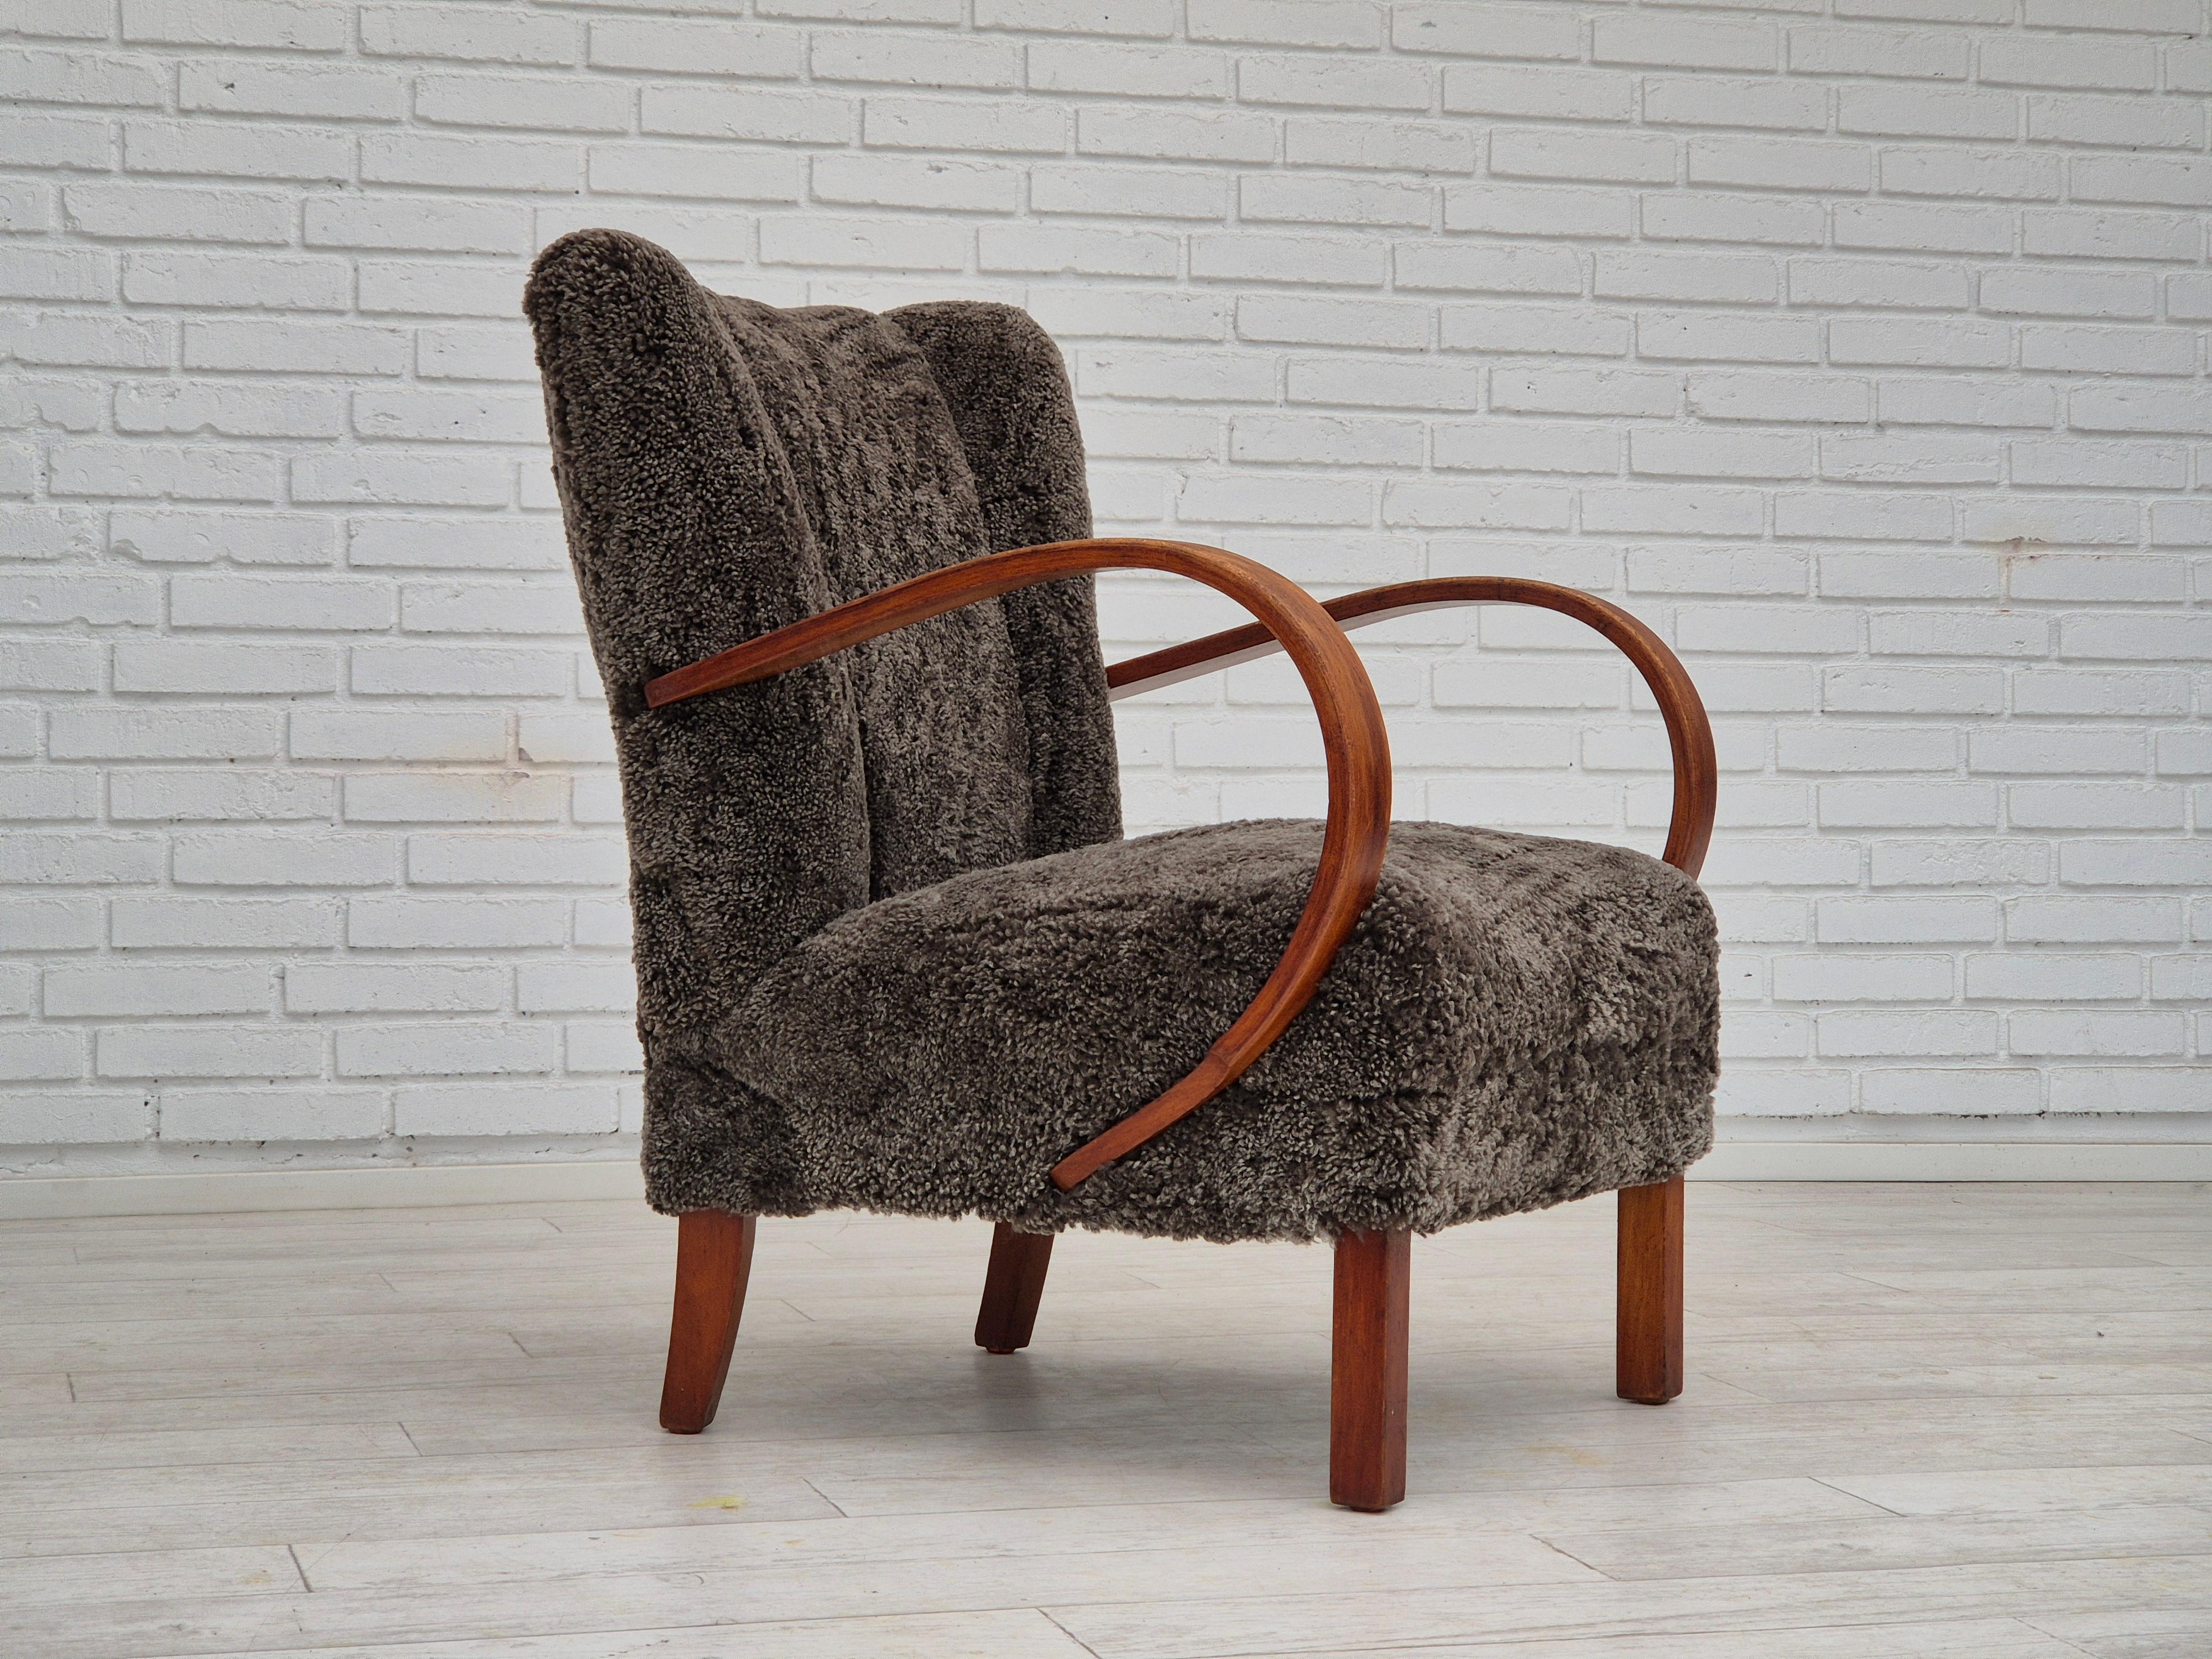 1950s, reupholstered Danish art-deco armchair. Quality Nevotex natural New Zealand sheepskin 